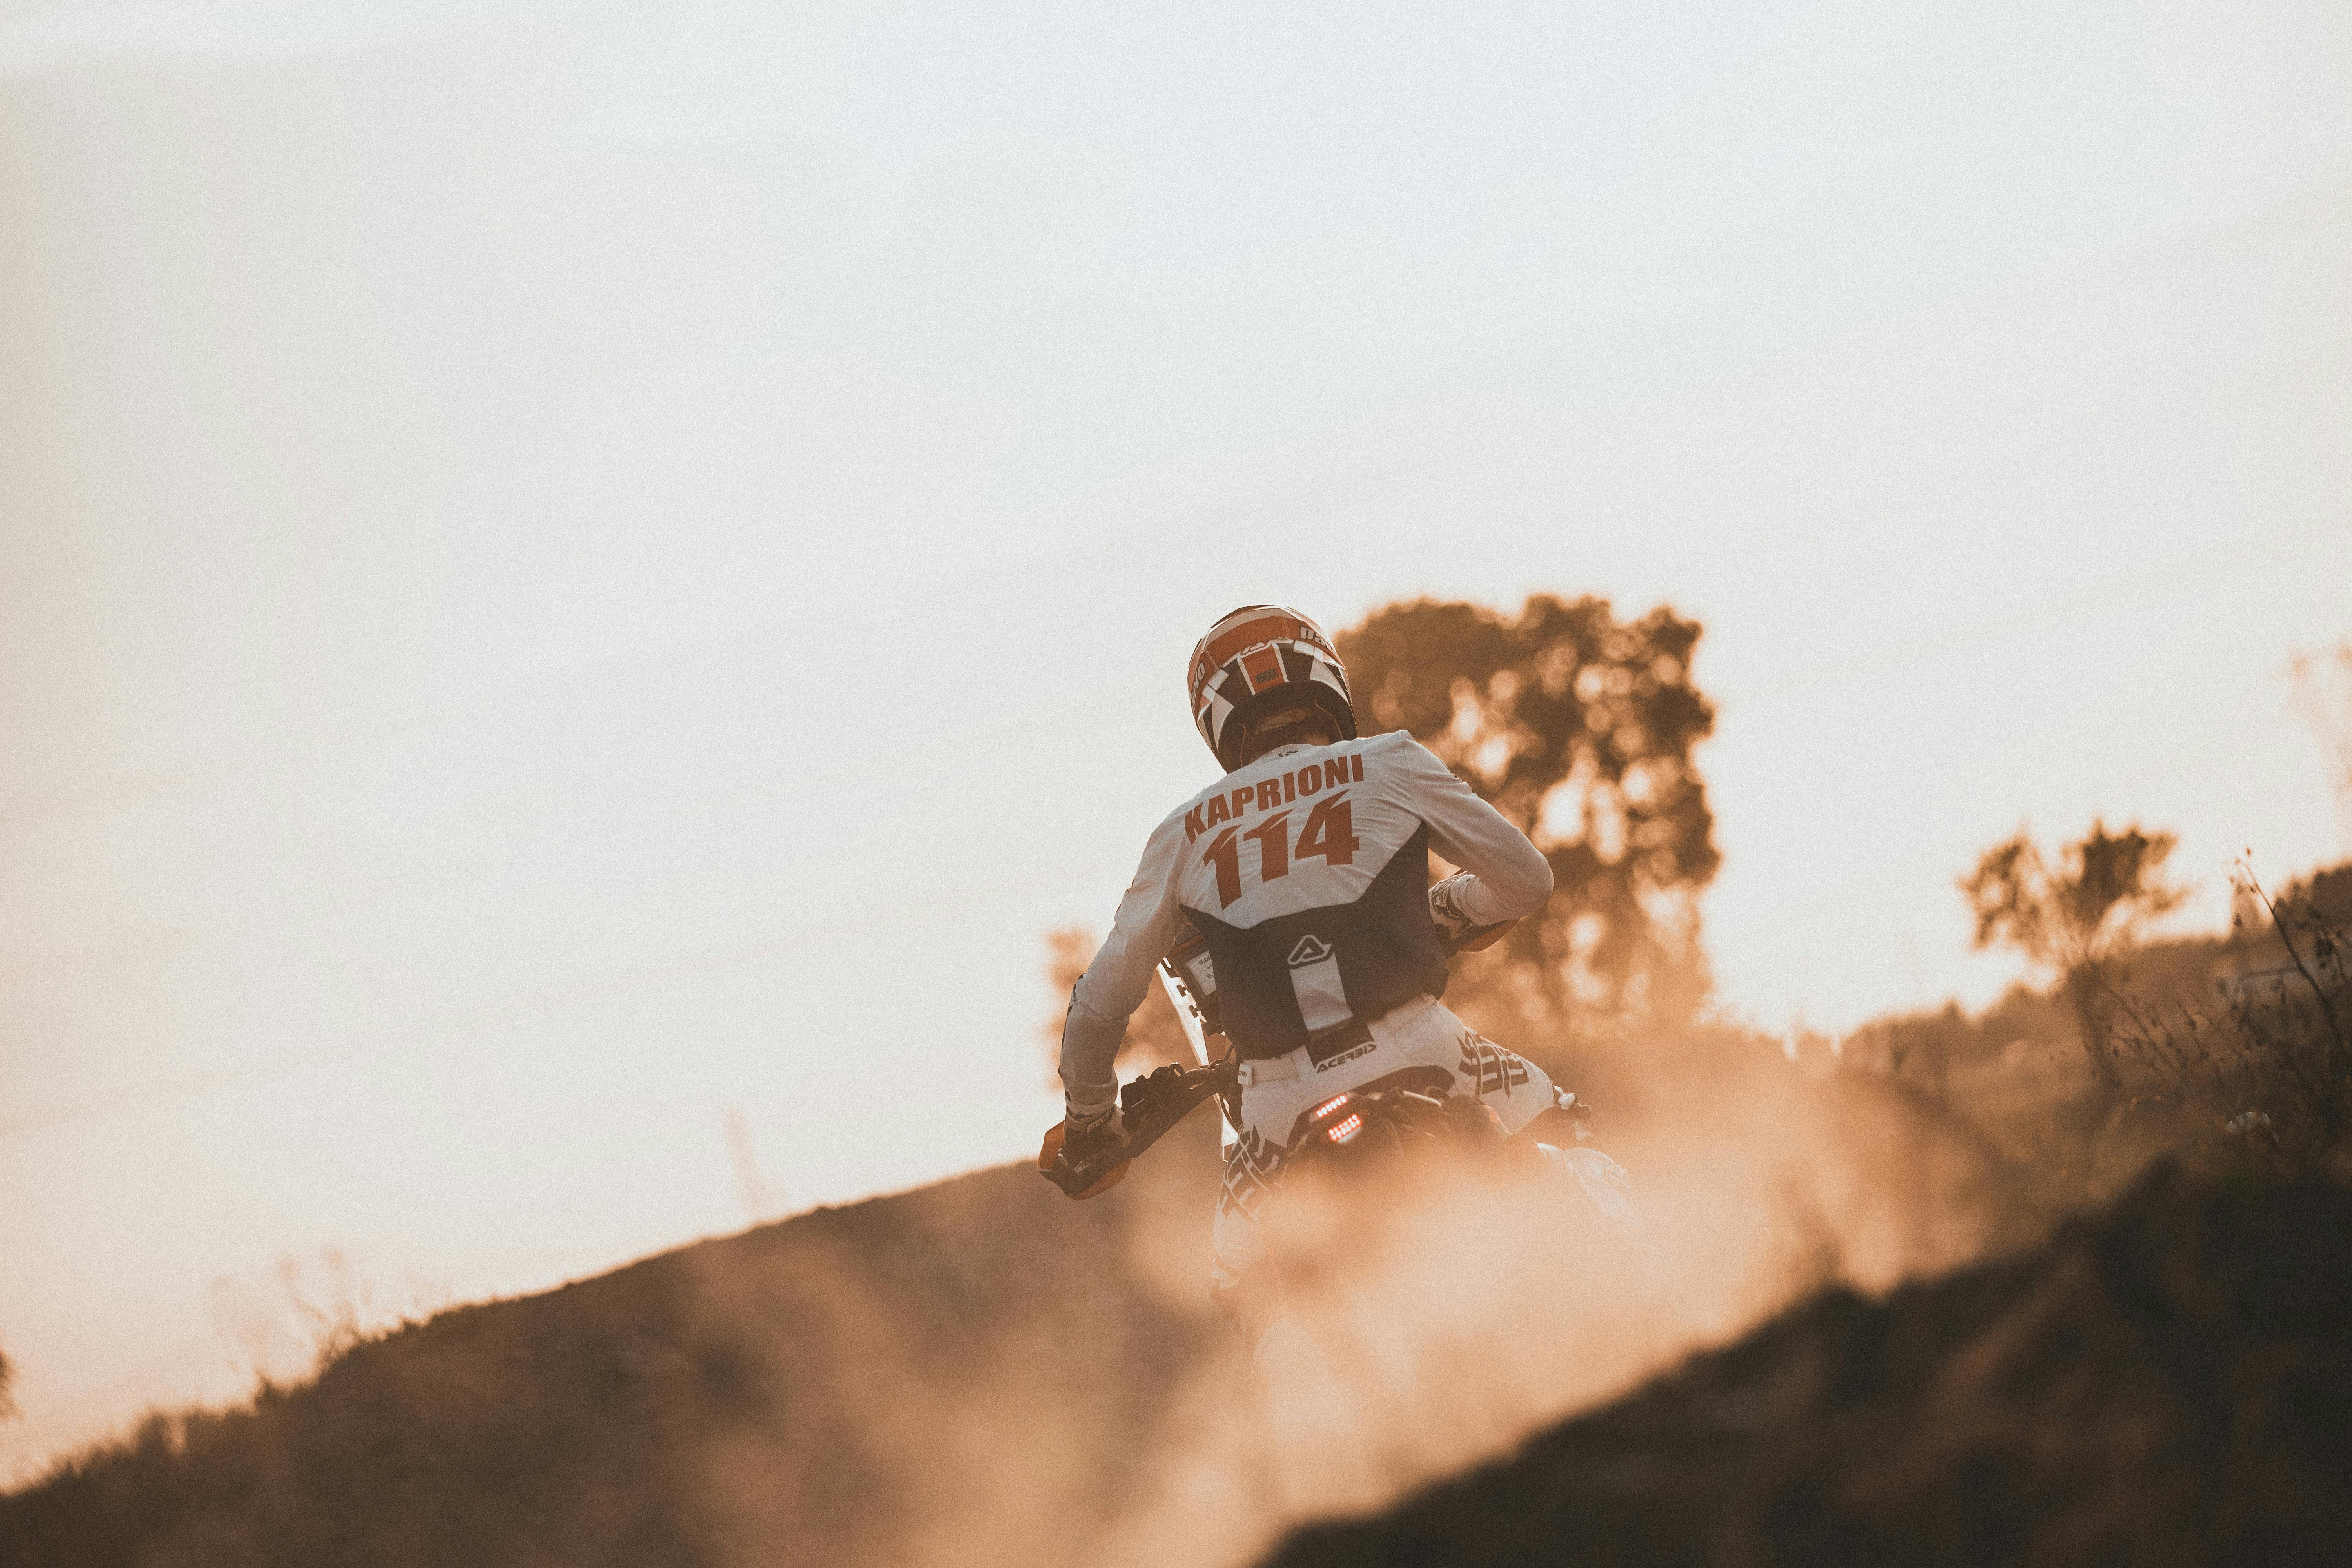 Pessoa Mostrando Corrida De Motocross · Foto profissional gratuita